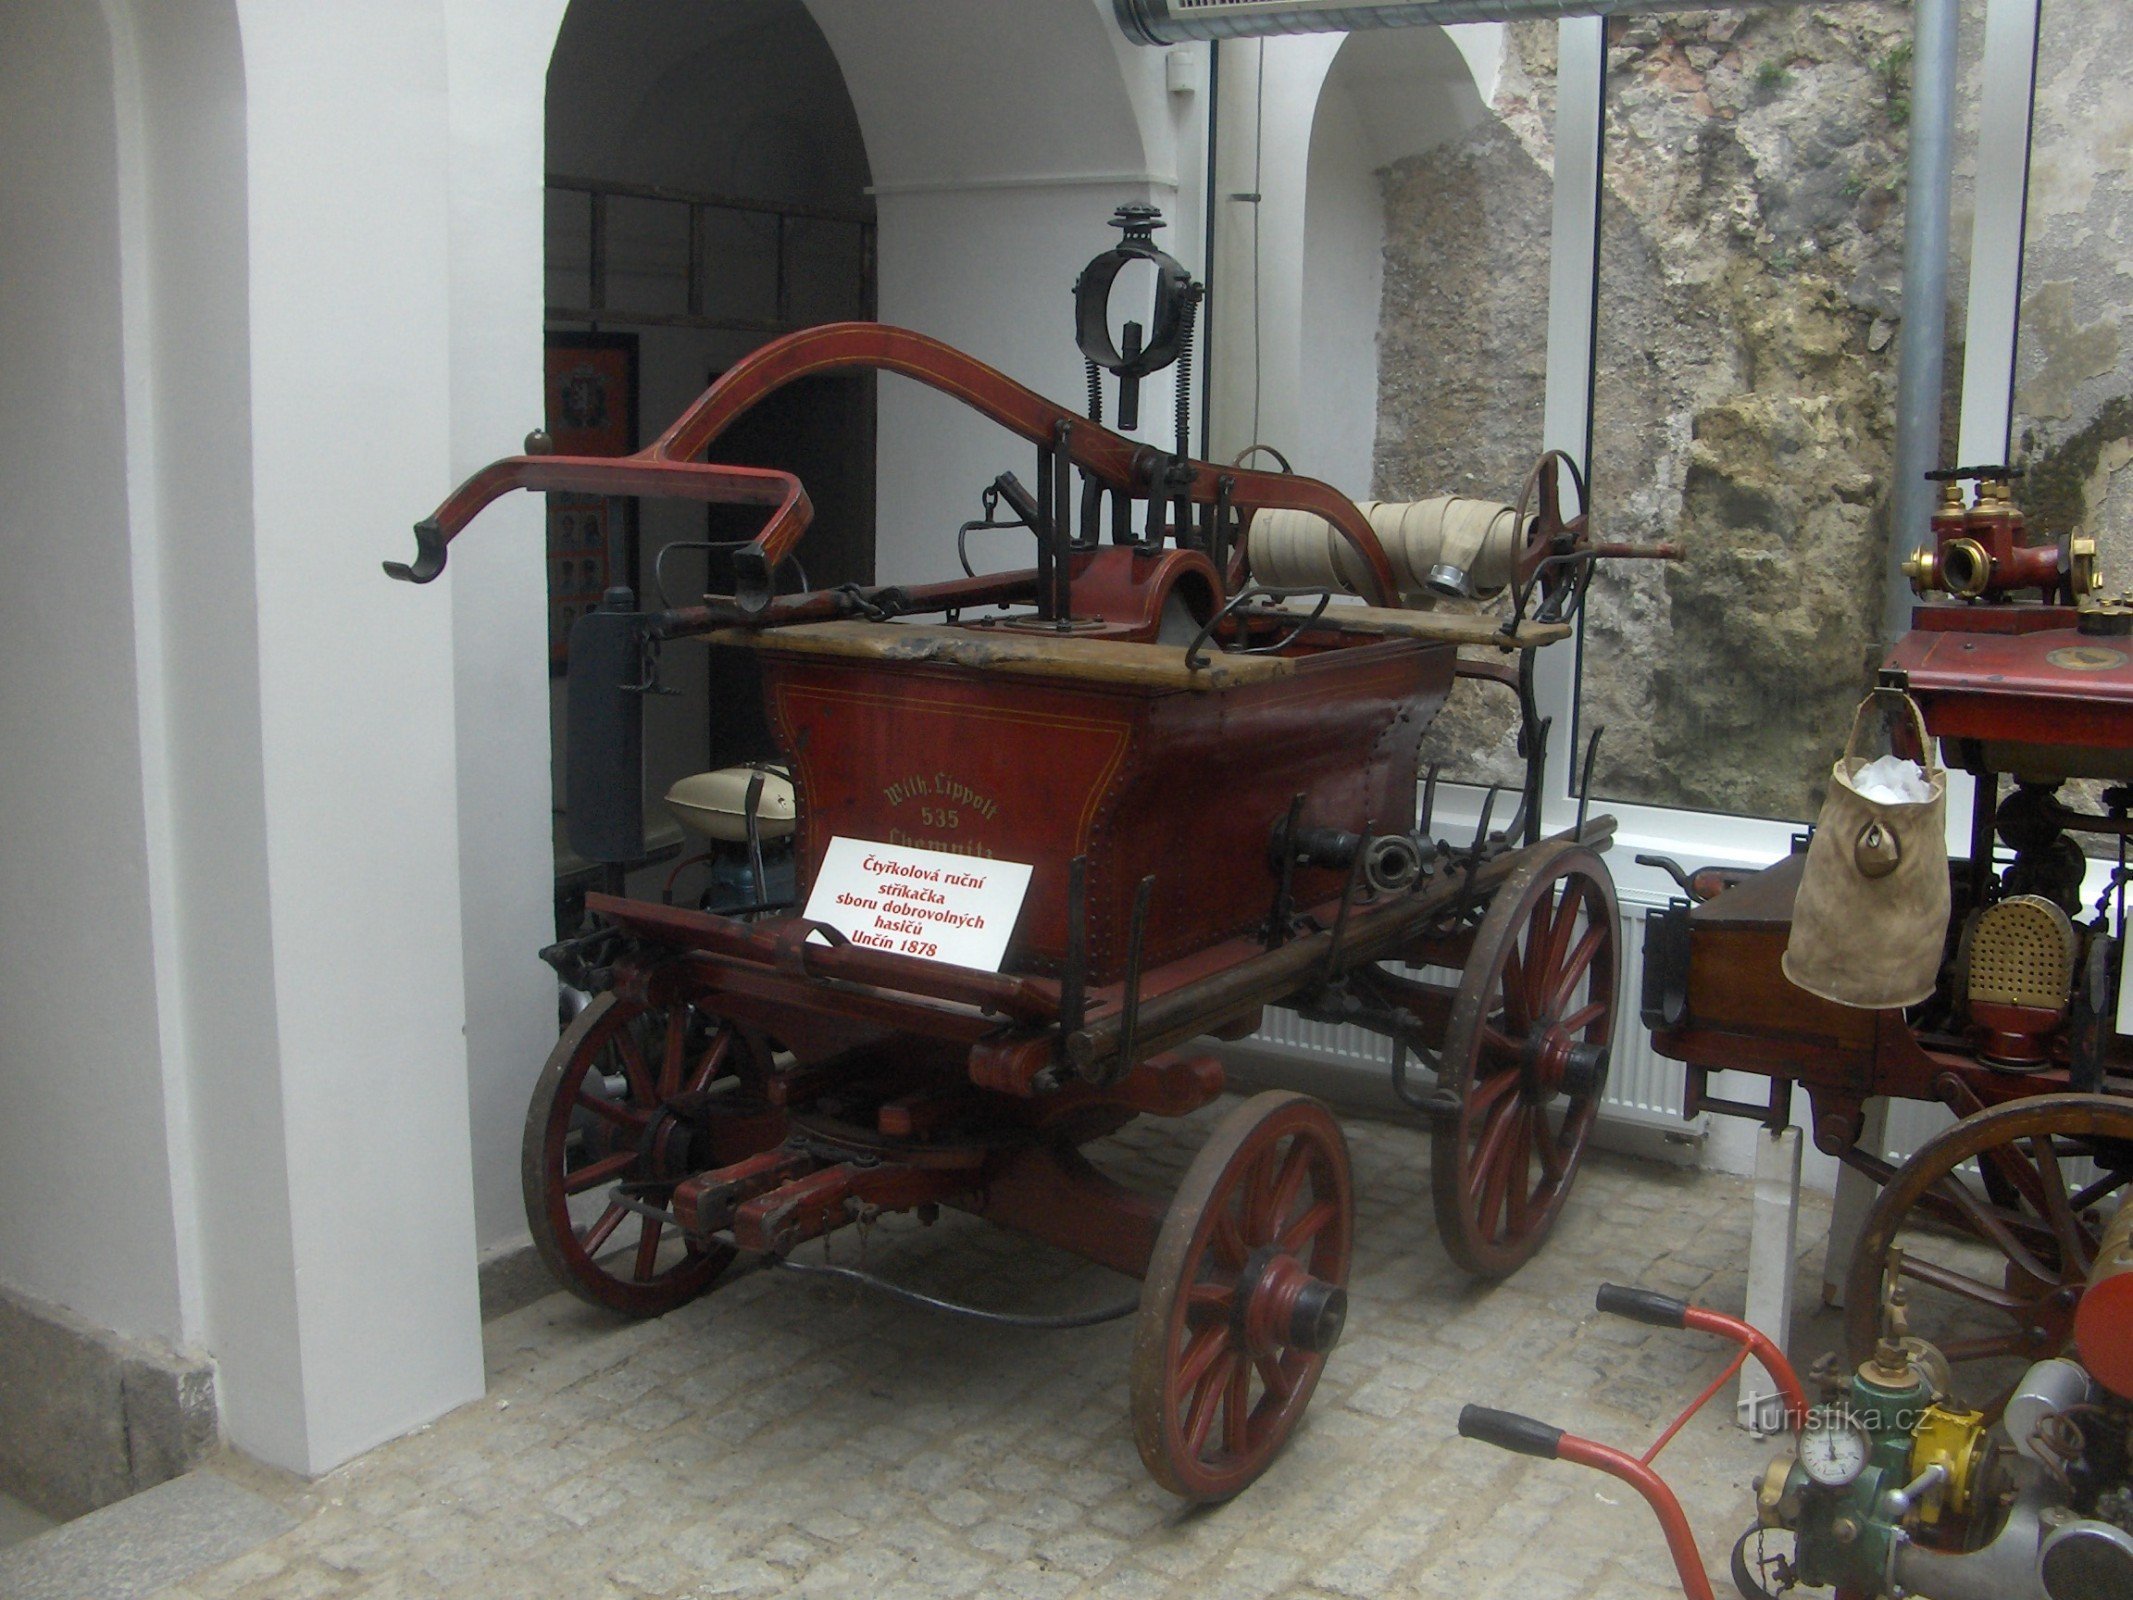 Firefighters Museum in Krupka.